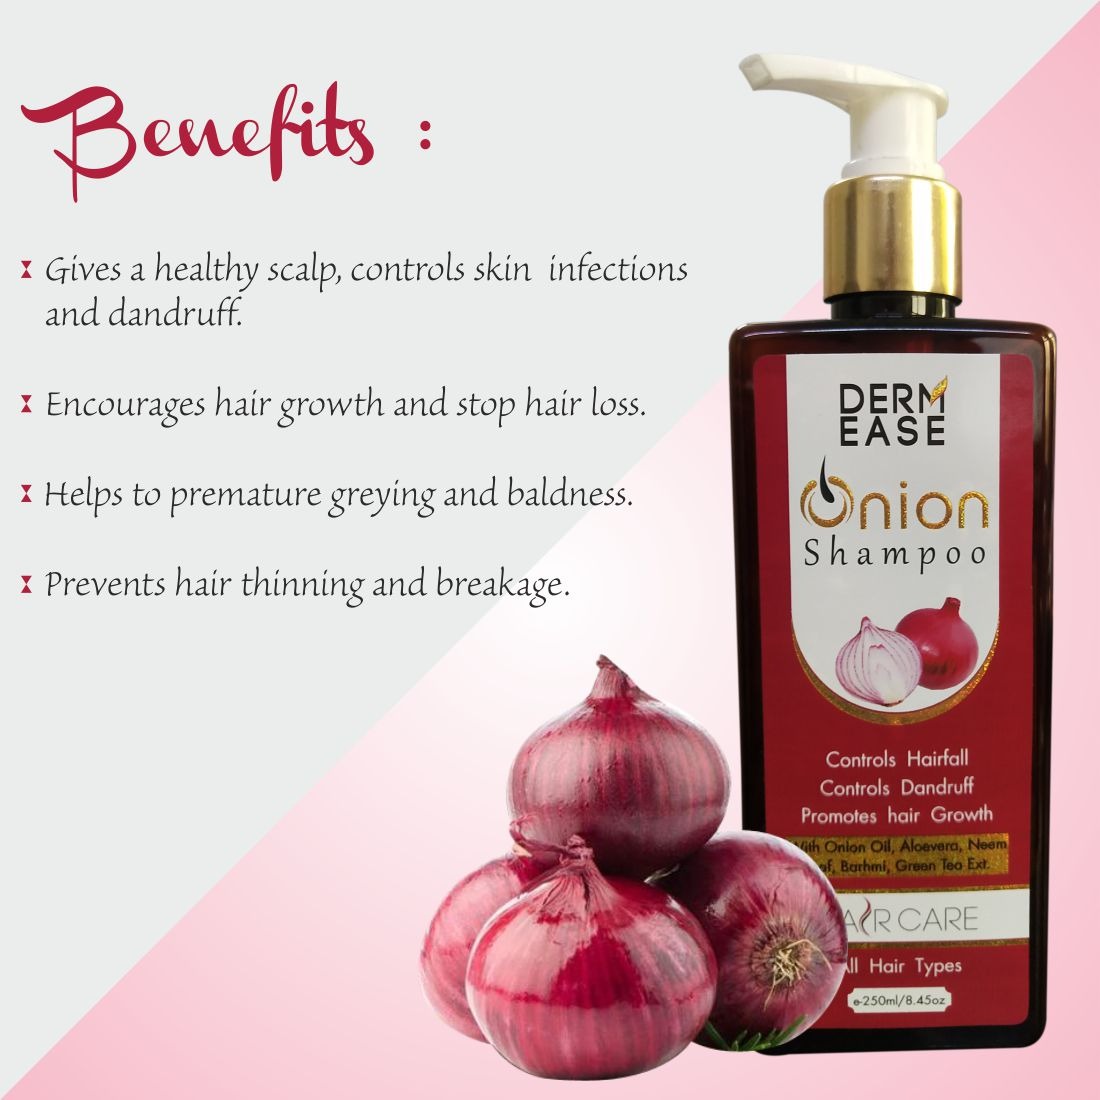 DERM EASE Onion Shampoo